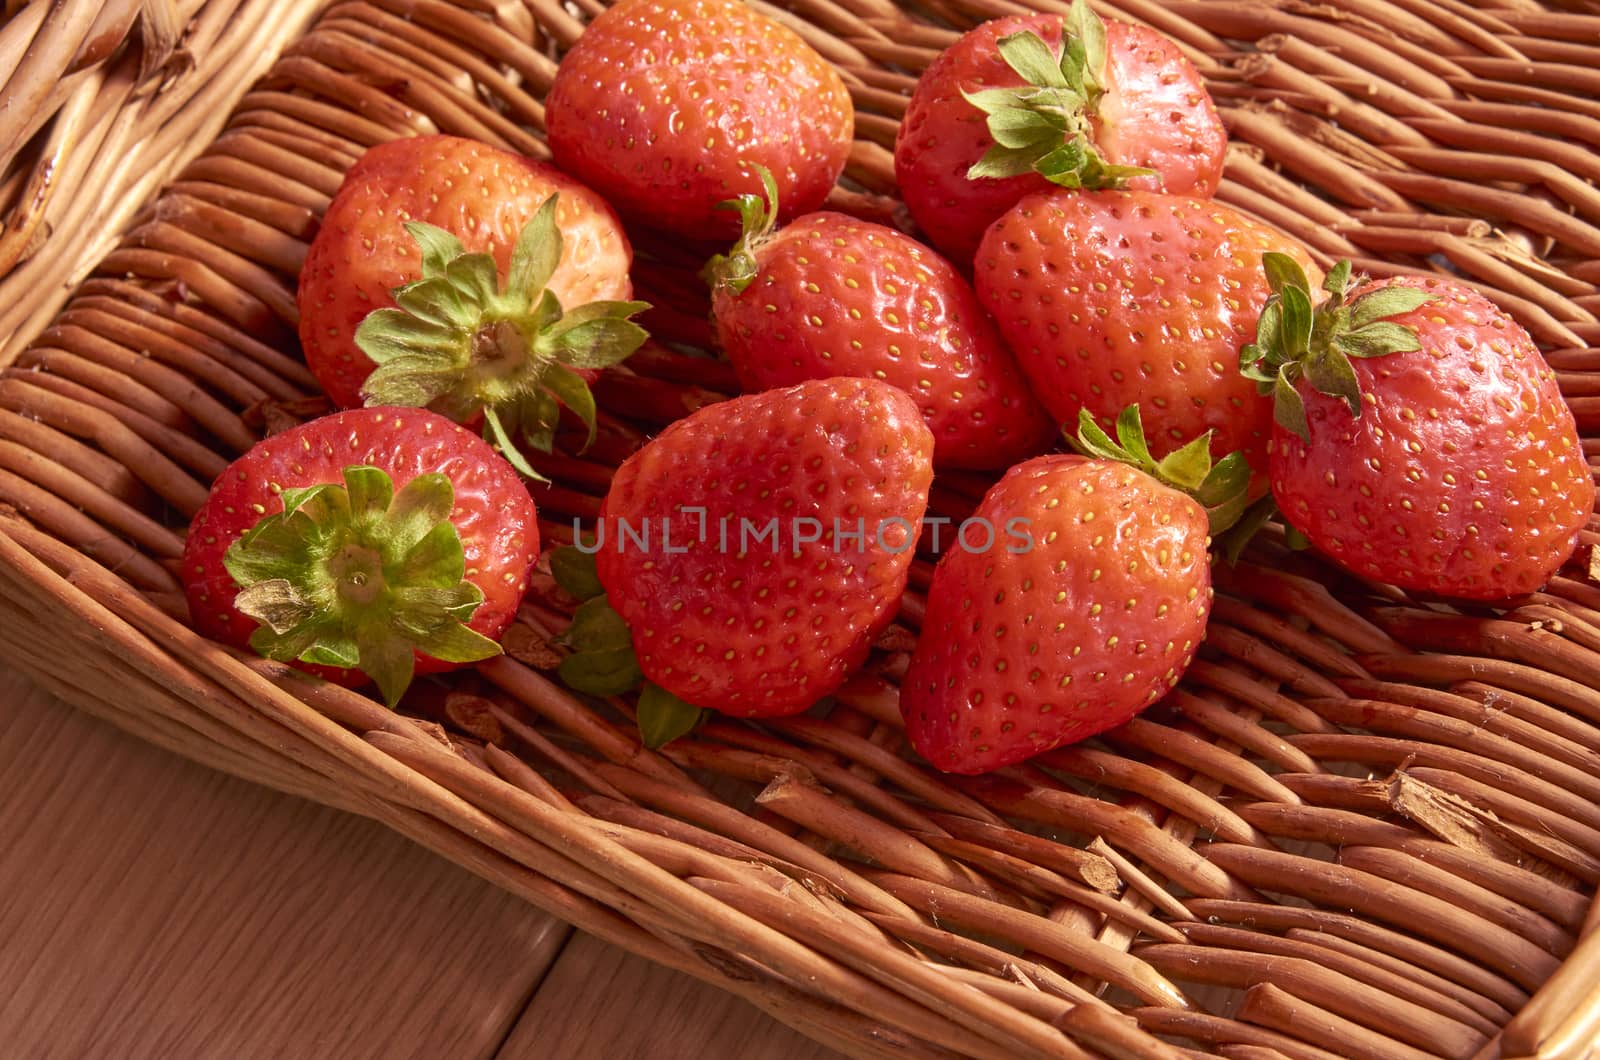 Strawberries in a cane basket by bpardofotografia